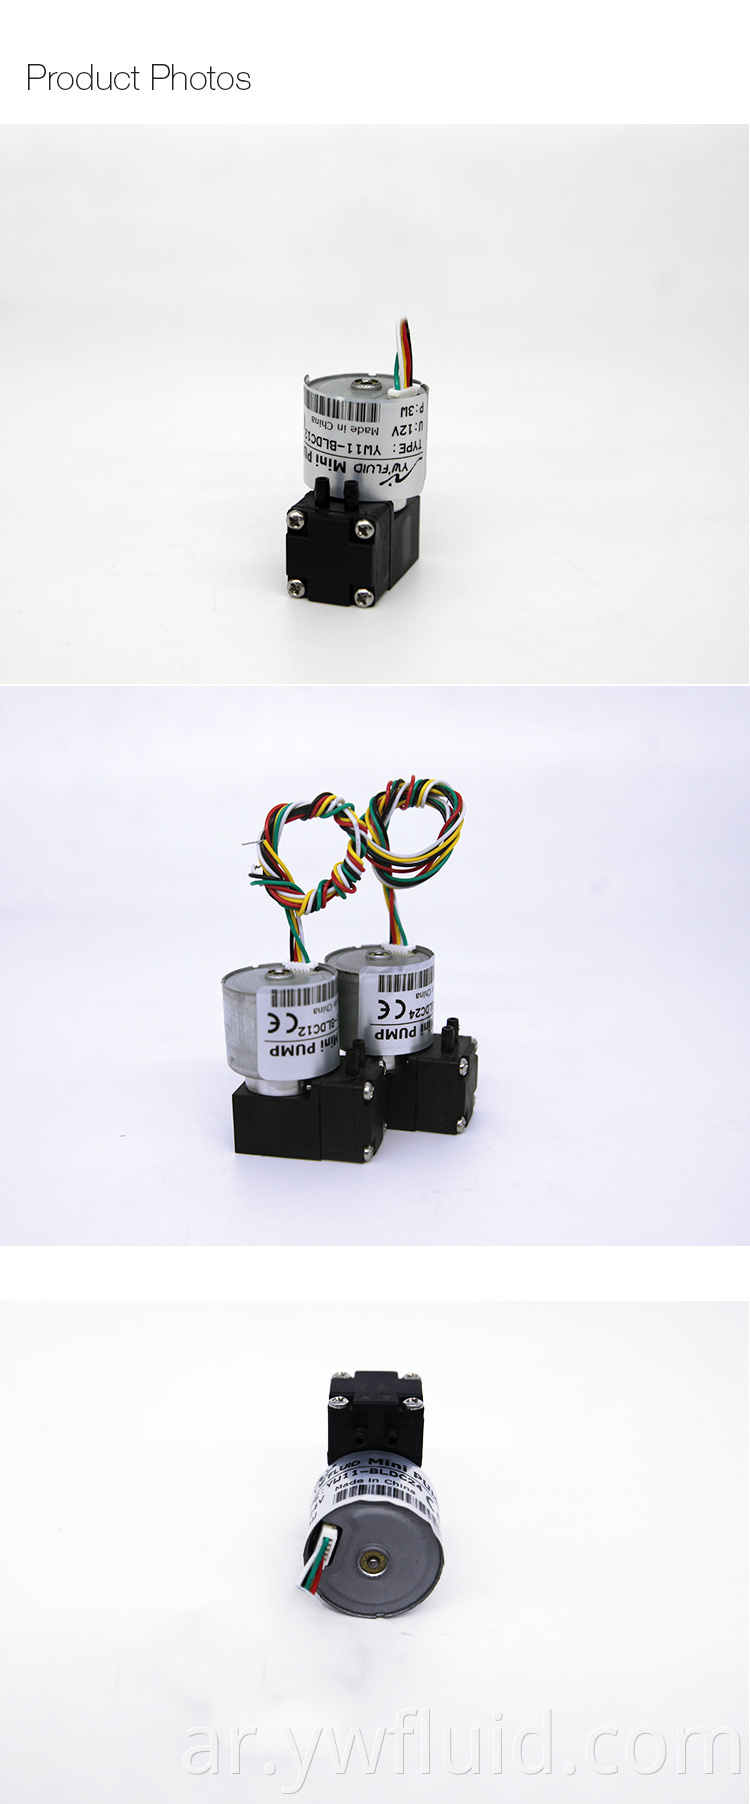 ywfluid yw11-bldc brushless motor micro series 12v dc mini pump pump